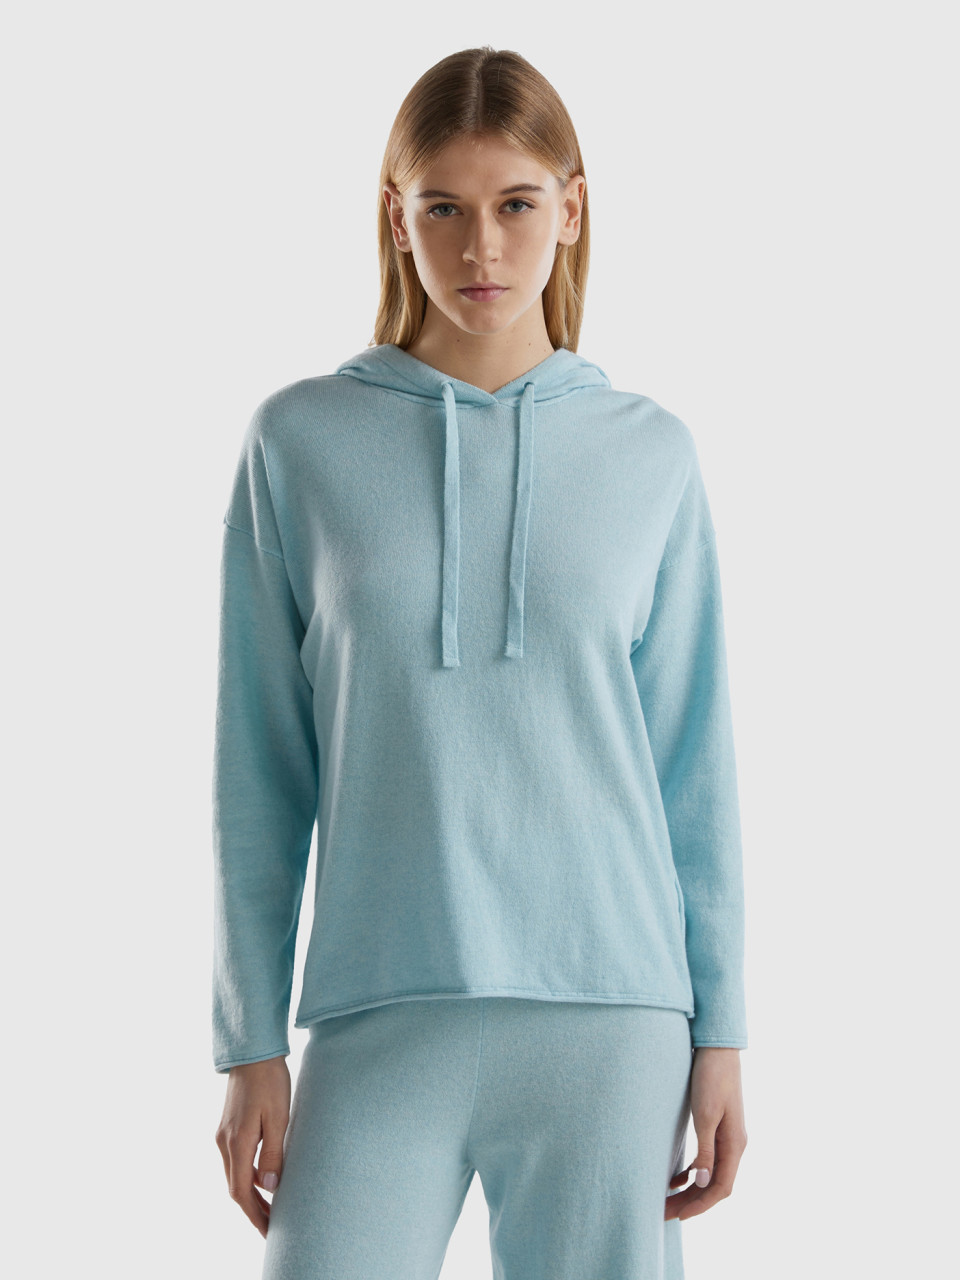 Benetton, Aqua Cashmere Blend Sweater With Hood, Aqua, Women